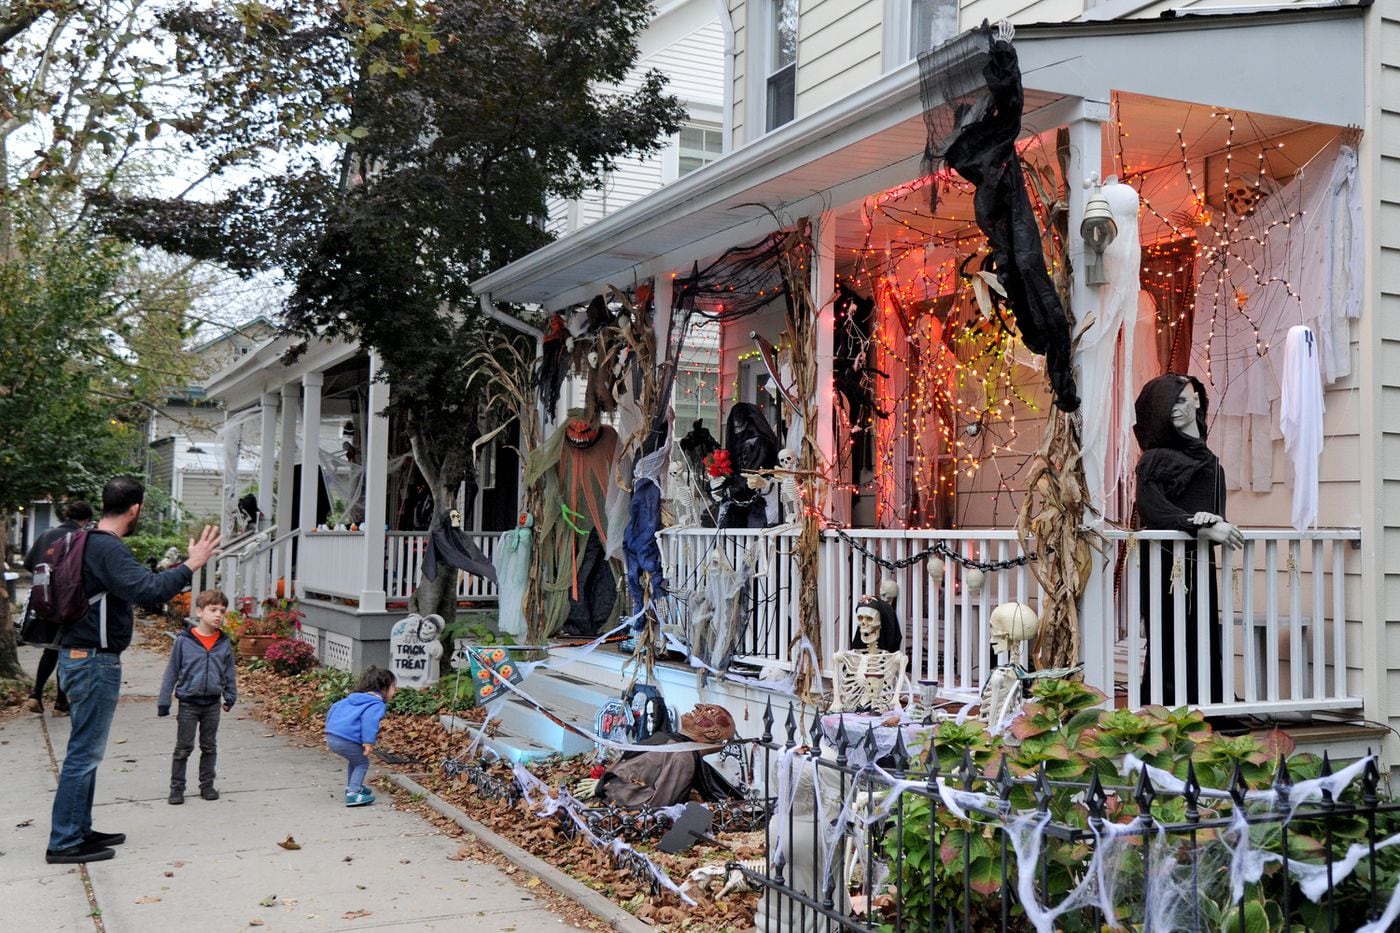 Halloween Ideas For Neighborhood